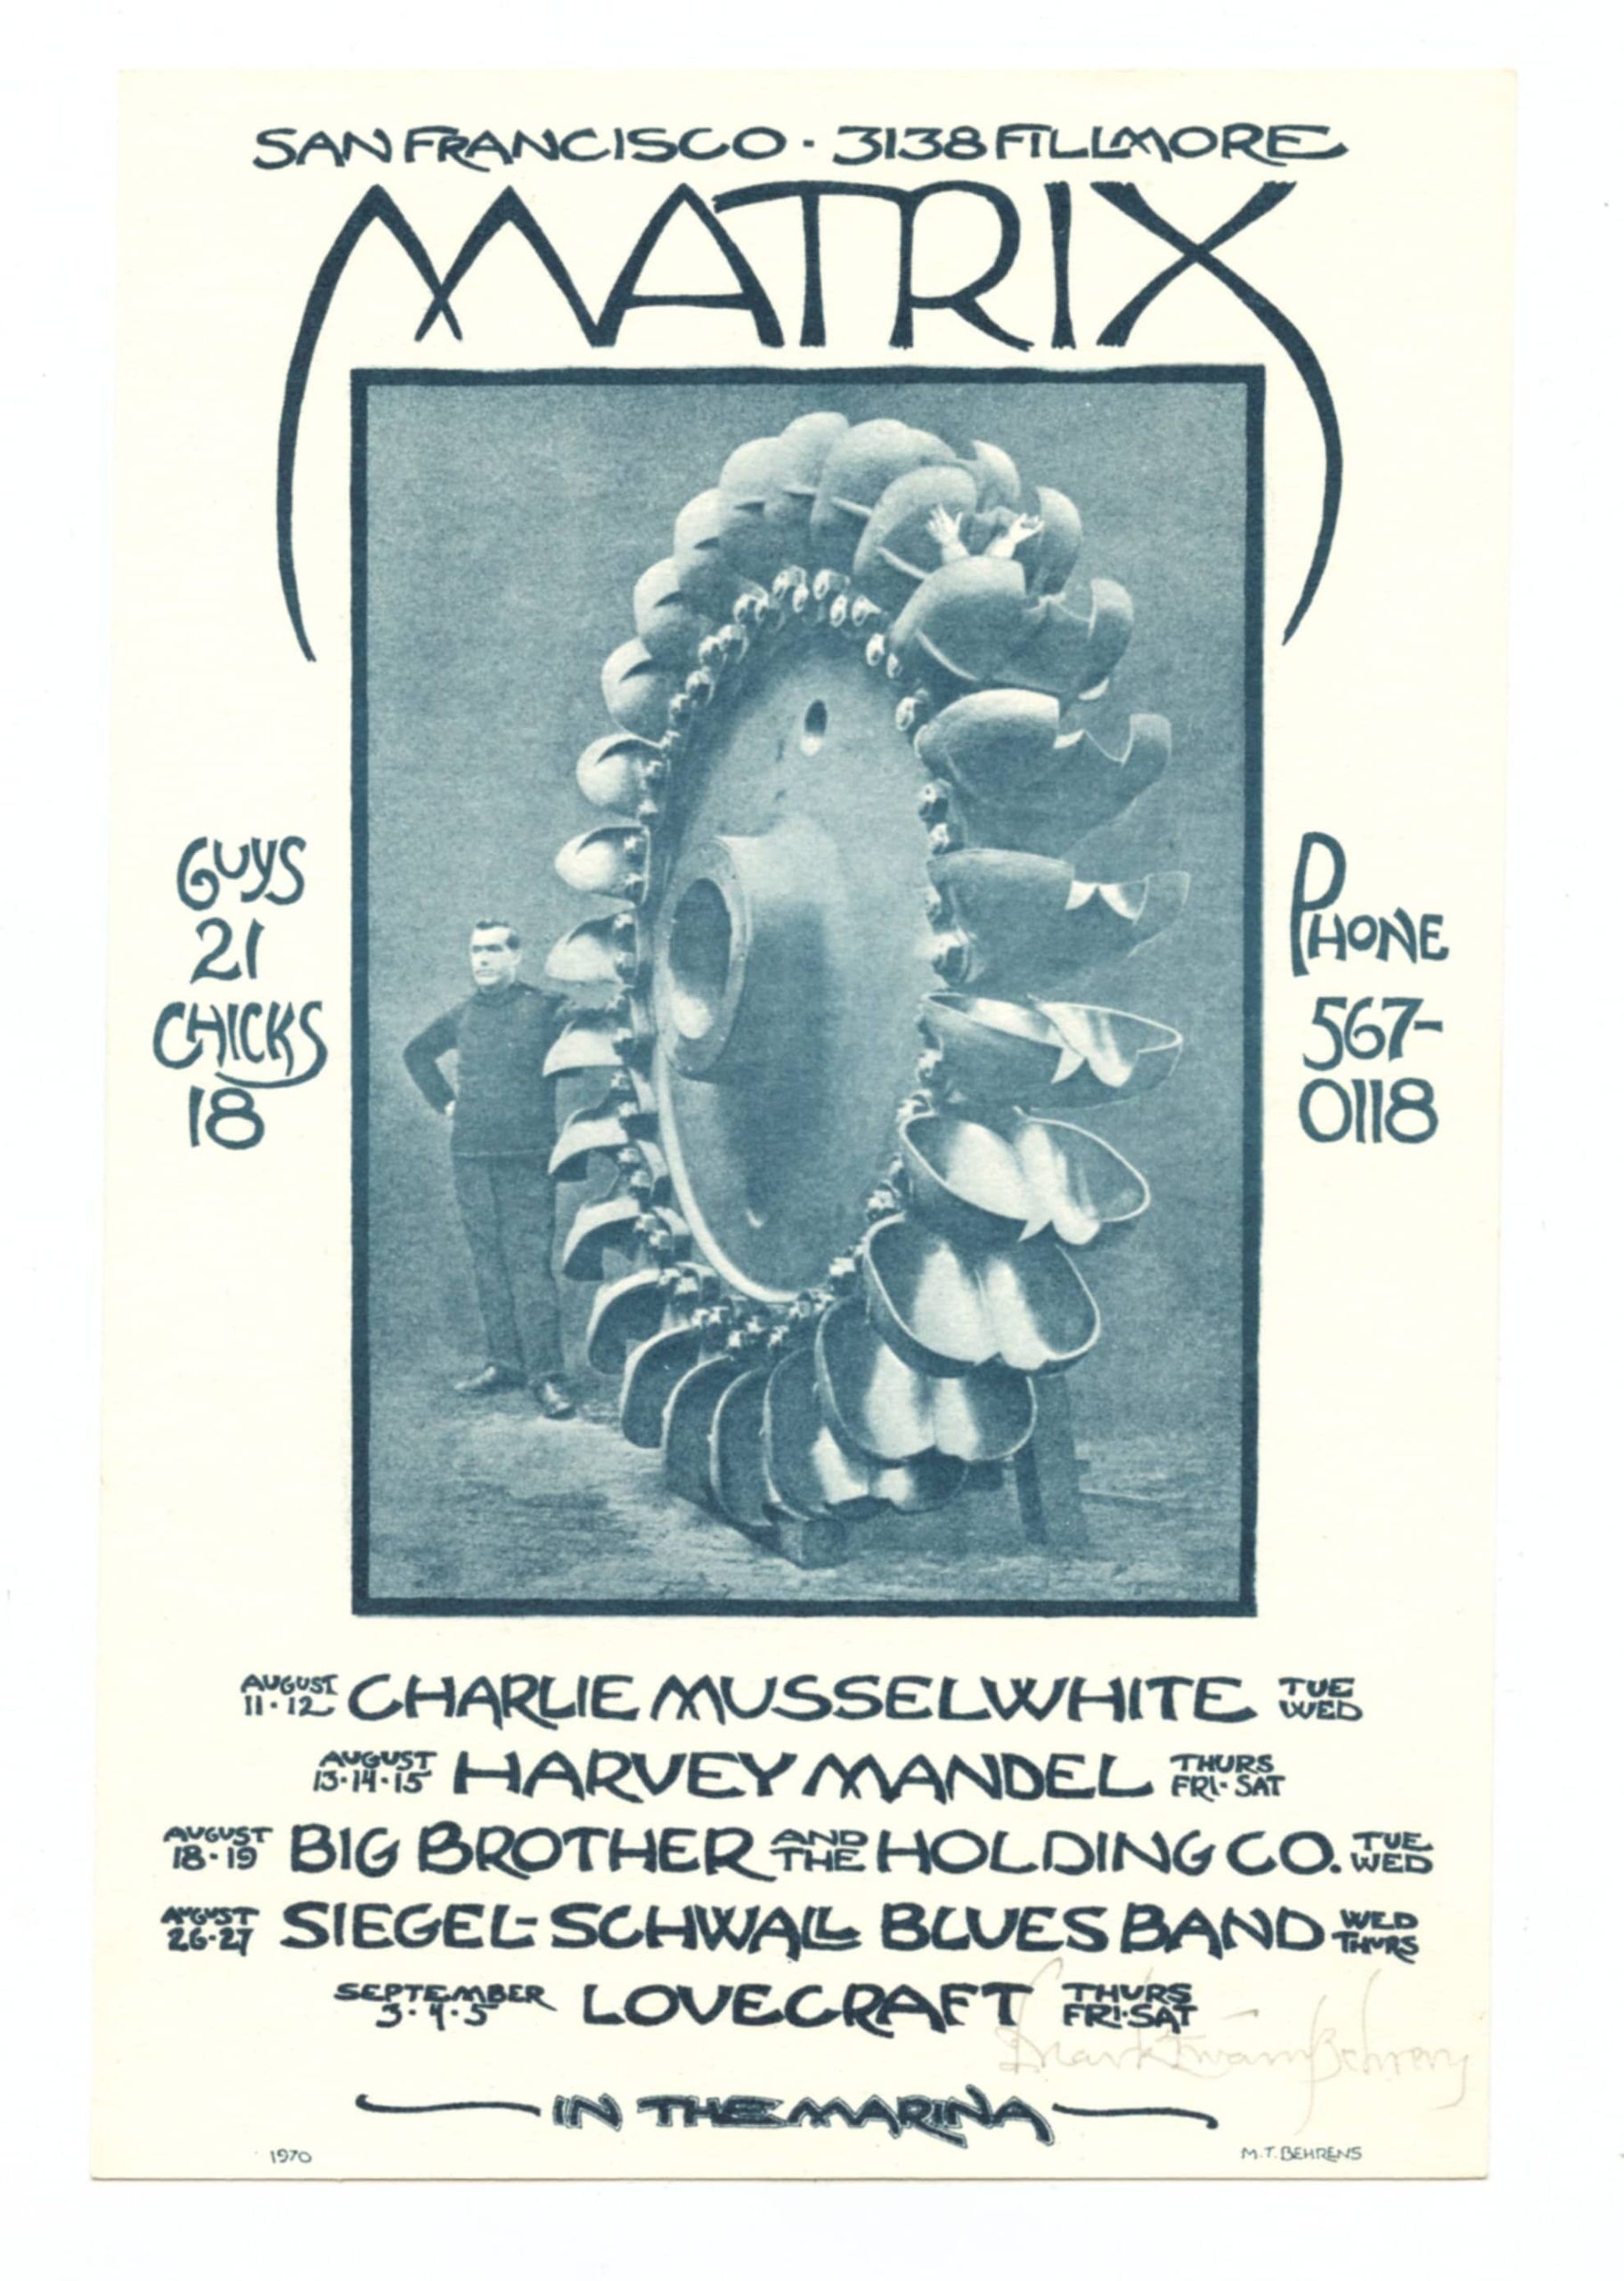 Charlie Musselwhite Handbill w/ Harvey Mandel 1970 Matrix Mark T. Behrens signed